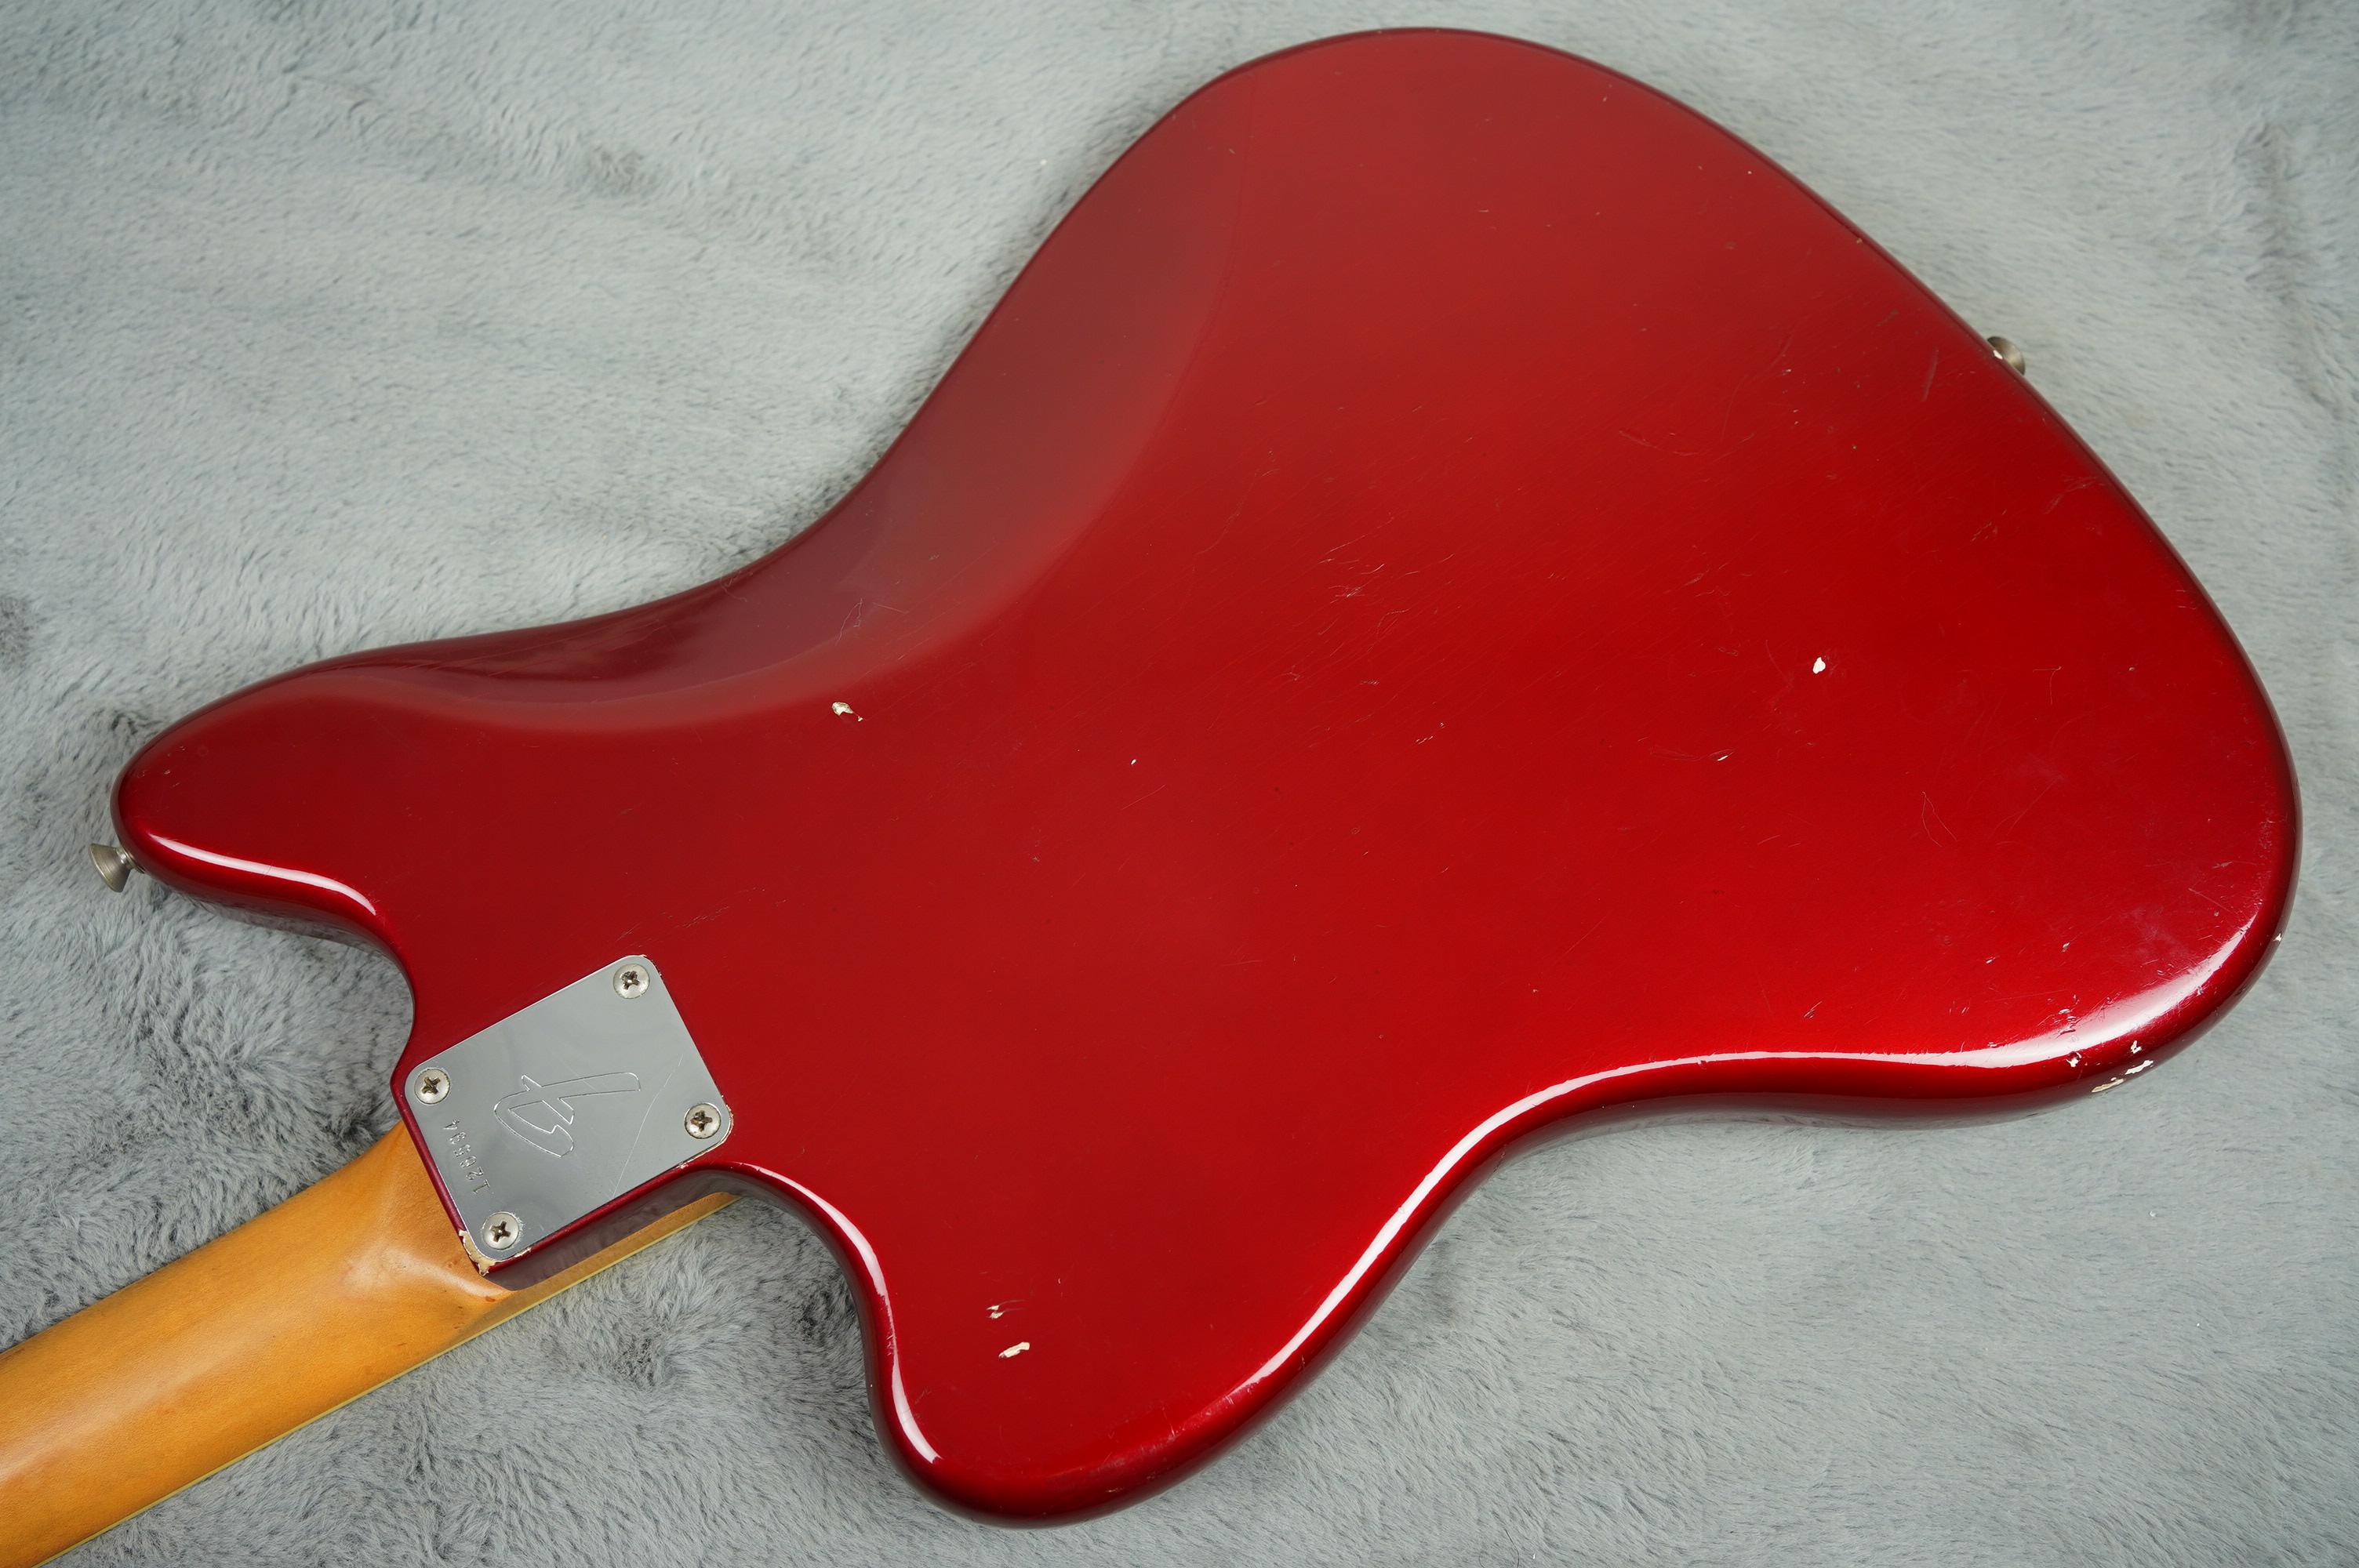 1966 Fender Jazzmaster Candy Apple Red